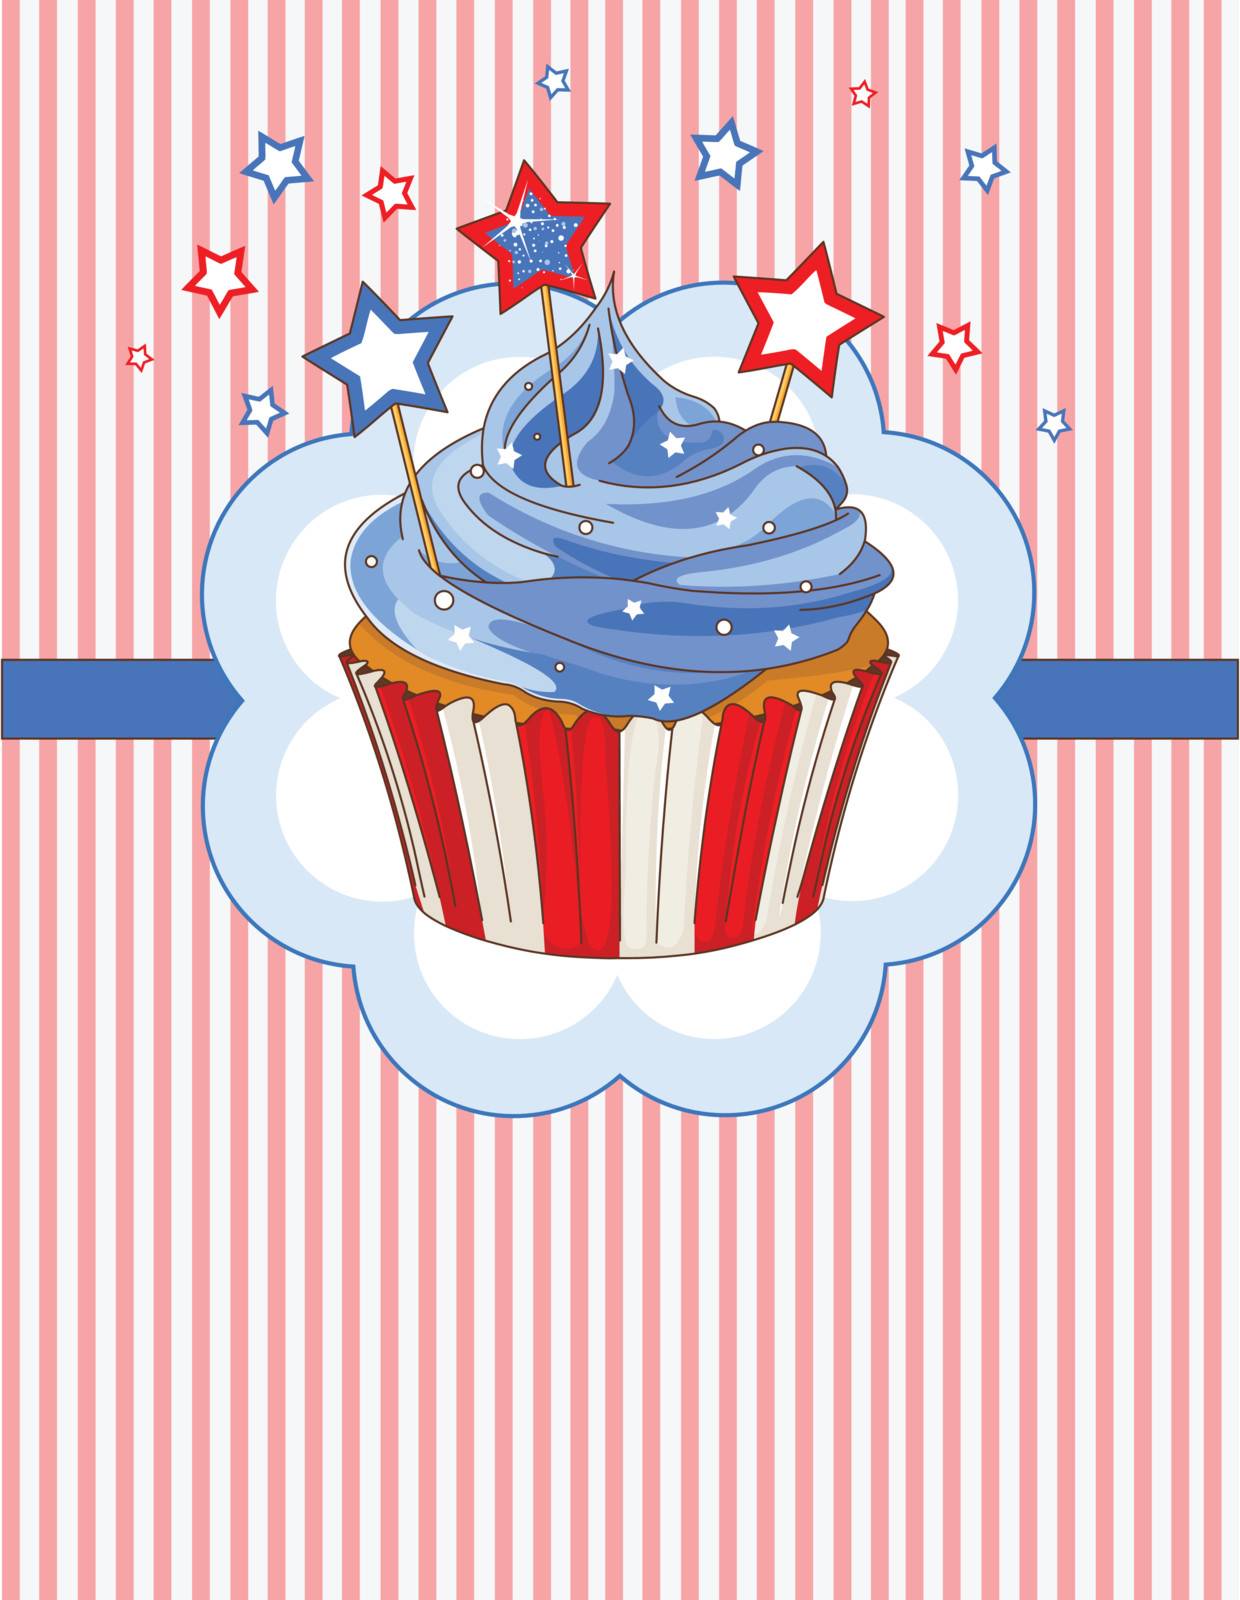 Patriotic cupcake place card by Dazdraperma